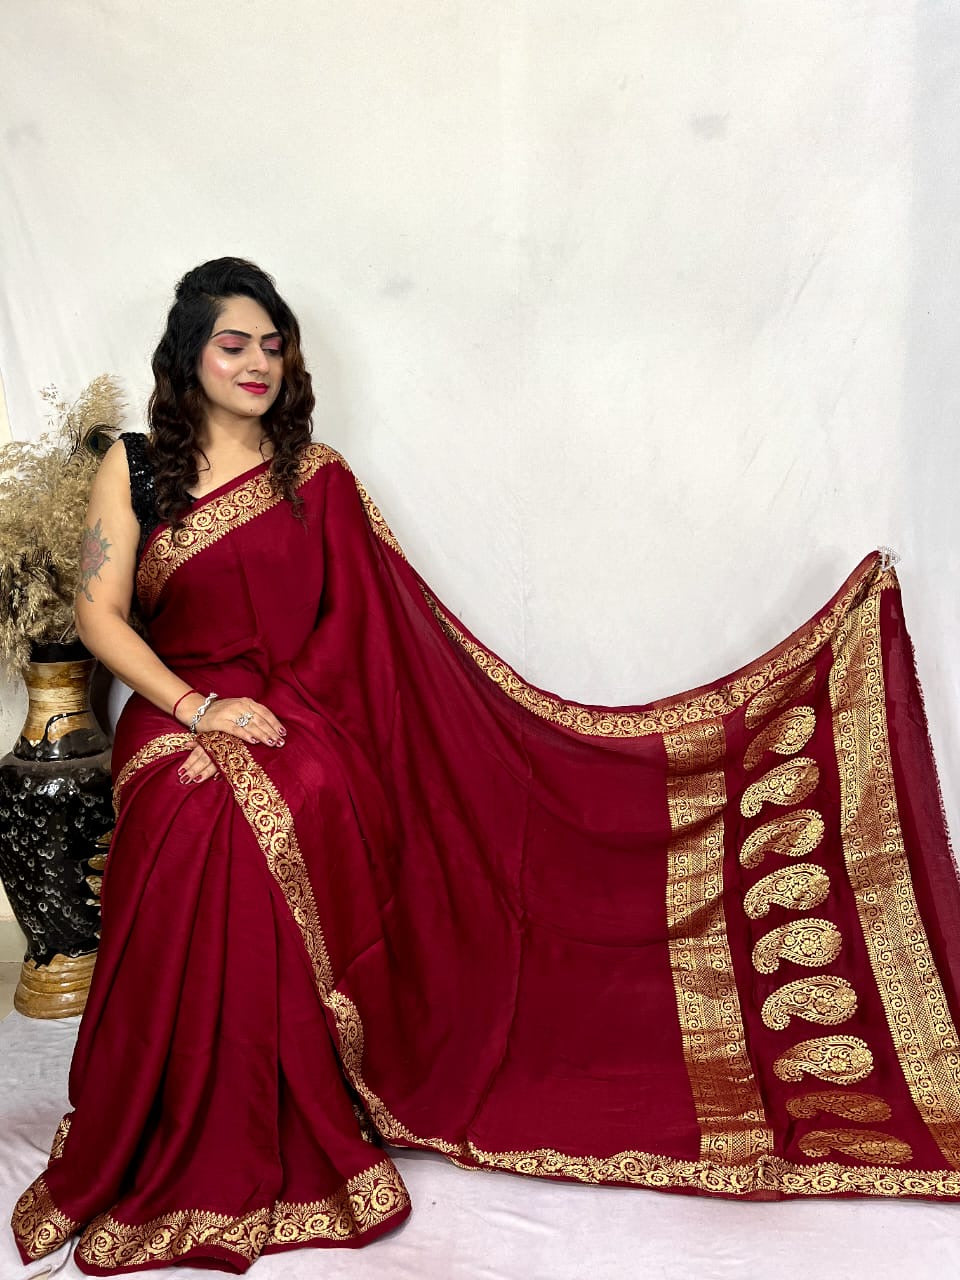 Modal Silk Golden Embroidery work Keri Pallu Saree - Premium  from Ethenika.com  - Just INR 5990! Shop now at Ethenika.com 